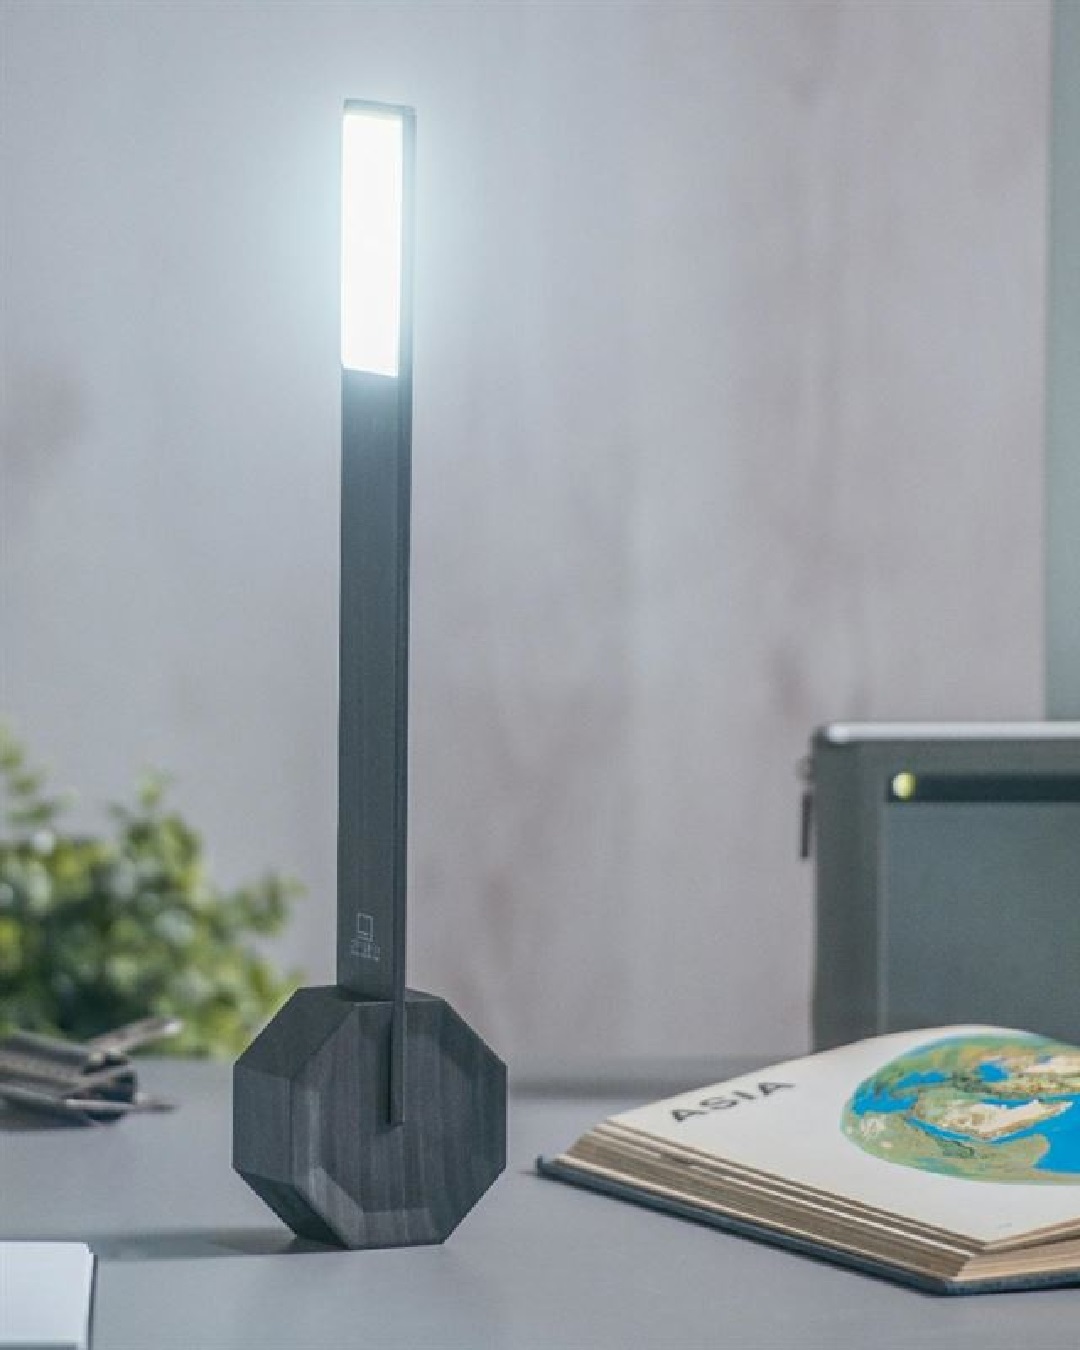 Octagon desk lamp on desk